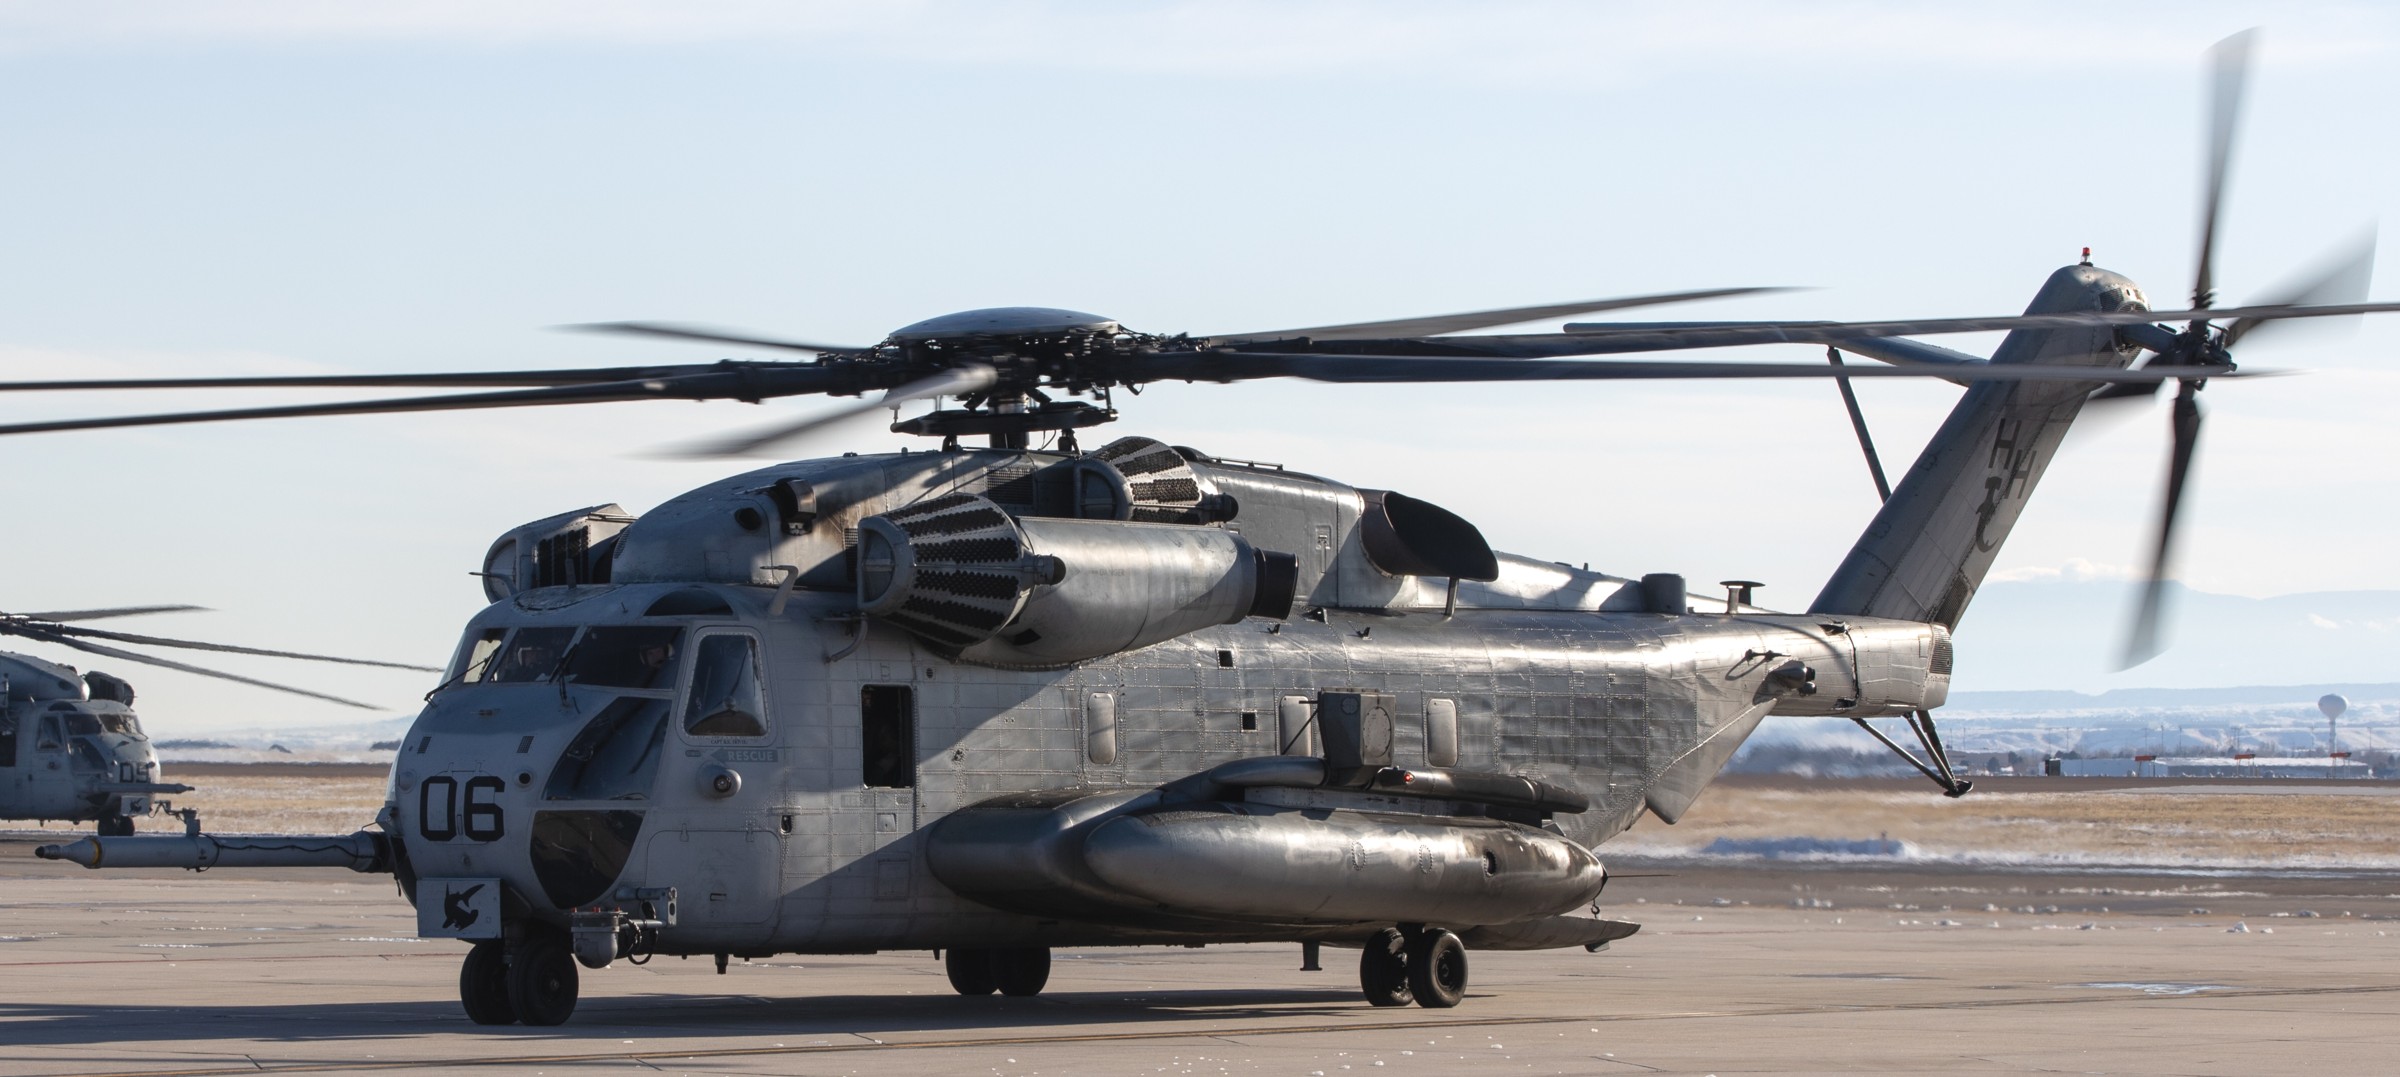 hmh-366 hammerheads marine heavy helicopter squadron usmc sikorsky ch-53e super stallion 102 peterson afb colorado